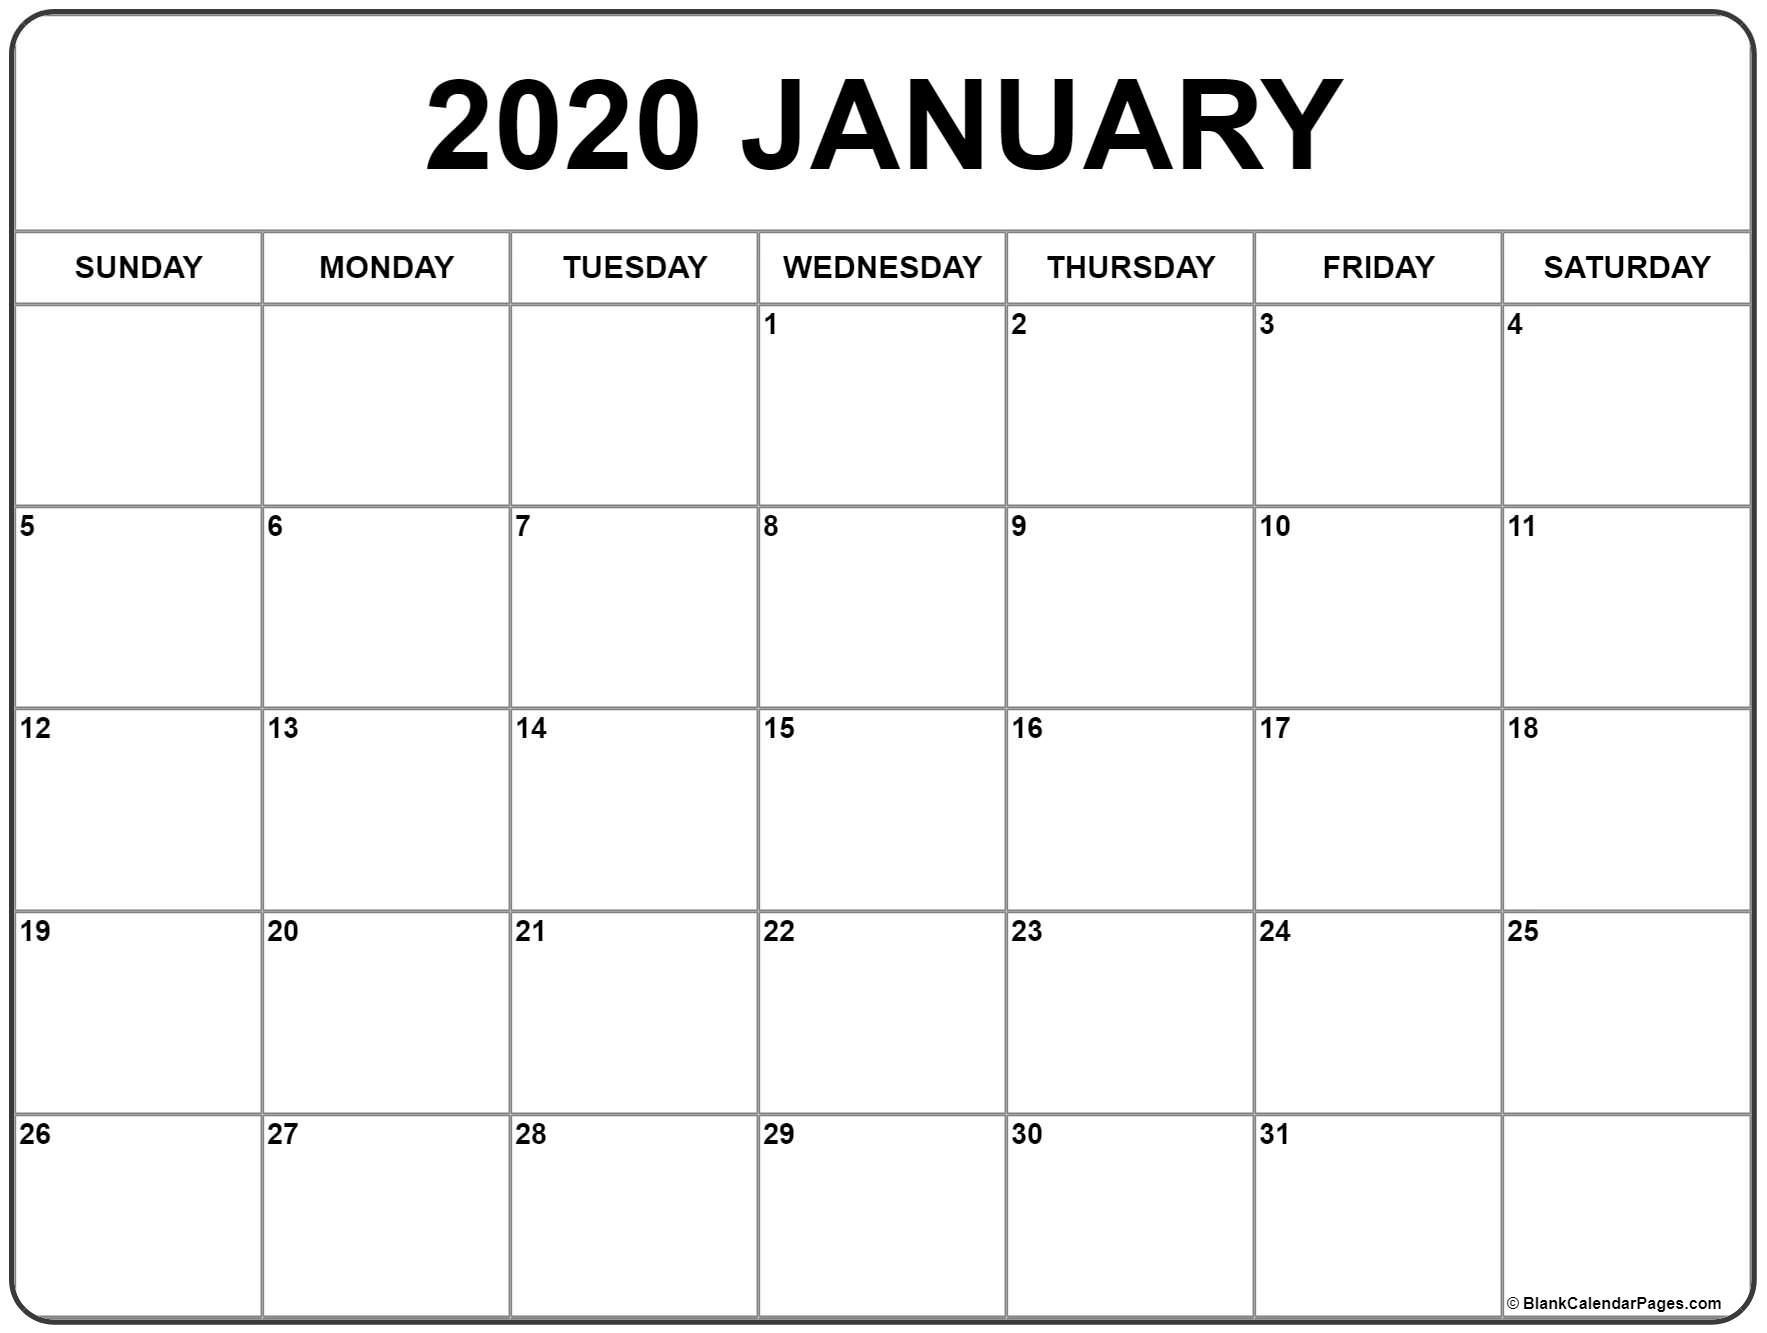 January 2020 Calendar | Free Printable Monthly Calendars-Monthly Calendar Monday -Sunday 2020 Printable Free